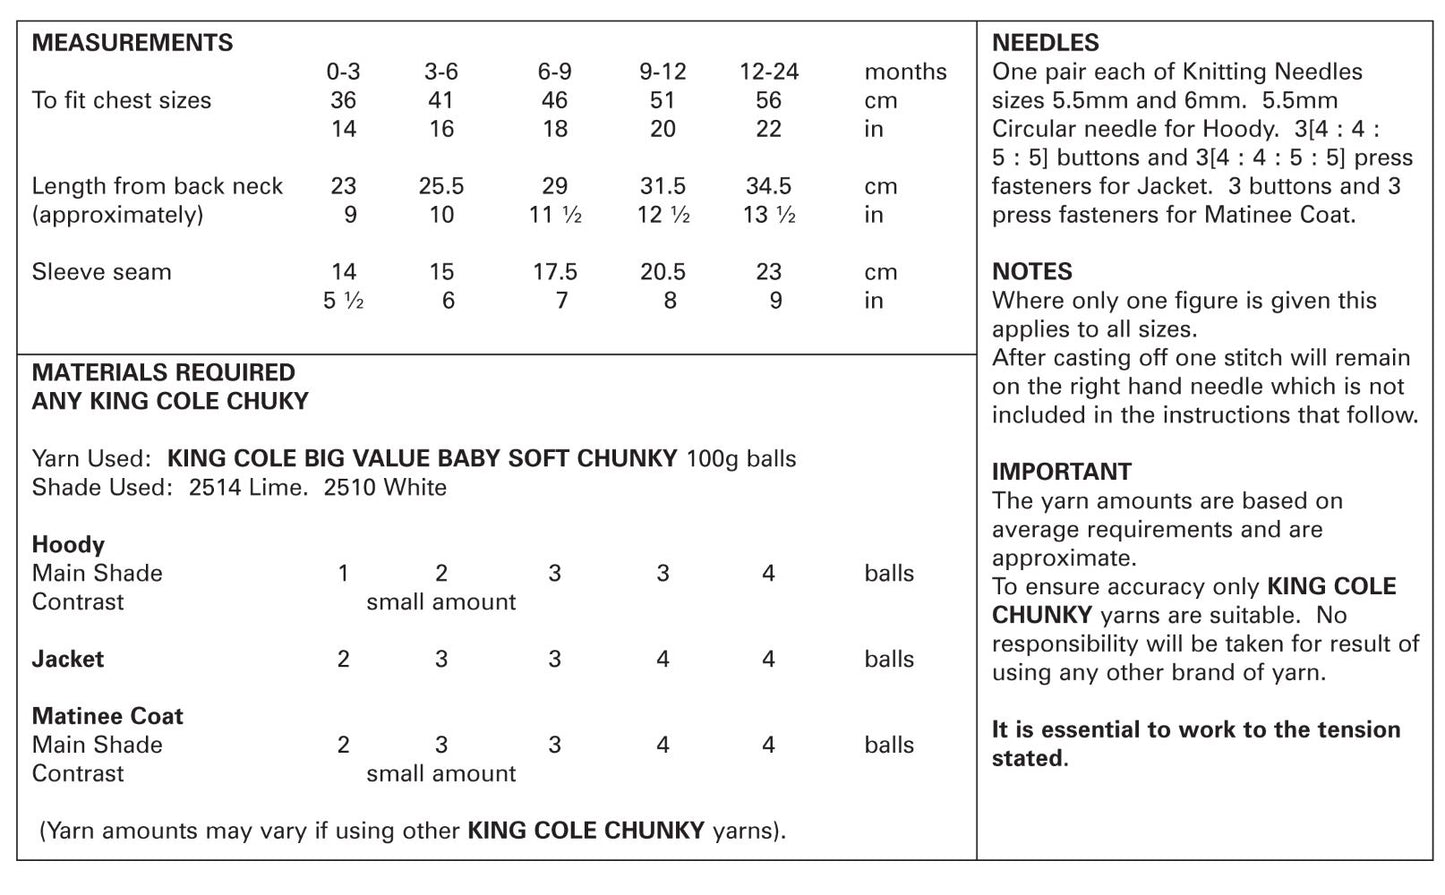 King Cole 4845 Baby Chunky Hoody Jacket Matinee Coat Knitting Pattern